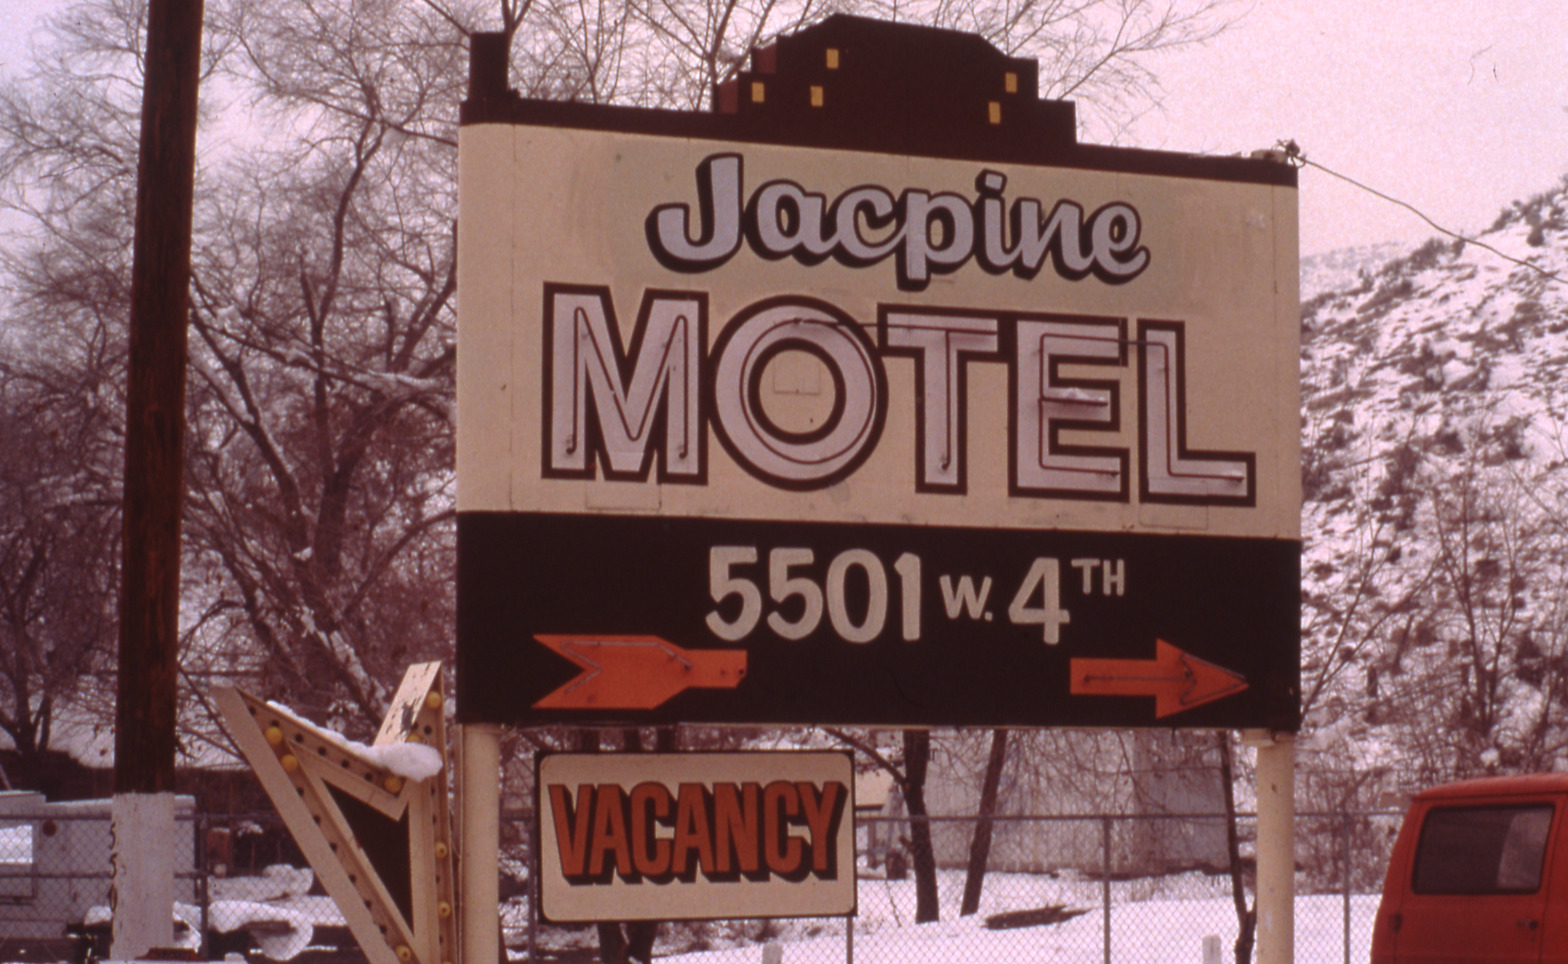 Jacpine Motel double mounted sign, Reno, Nevada: photographic print